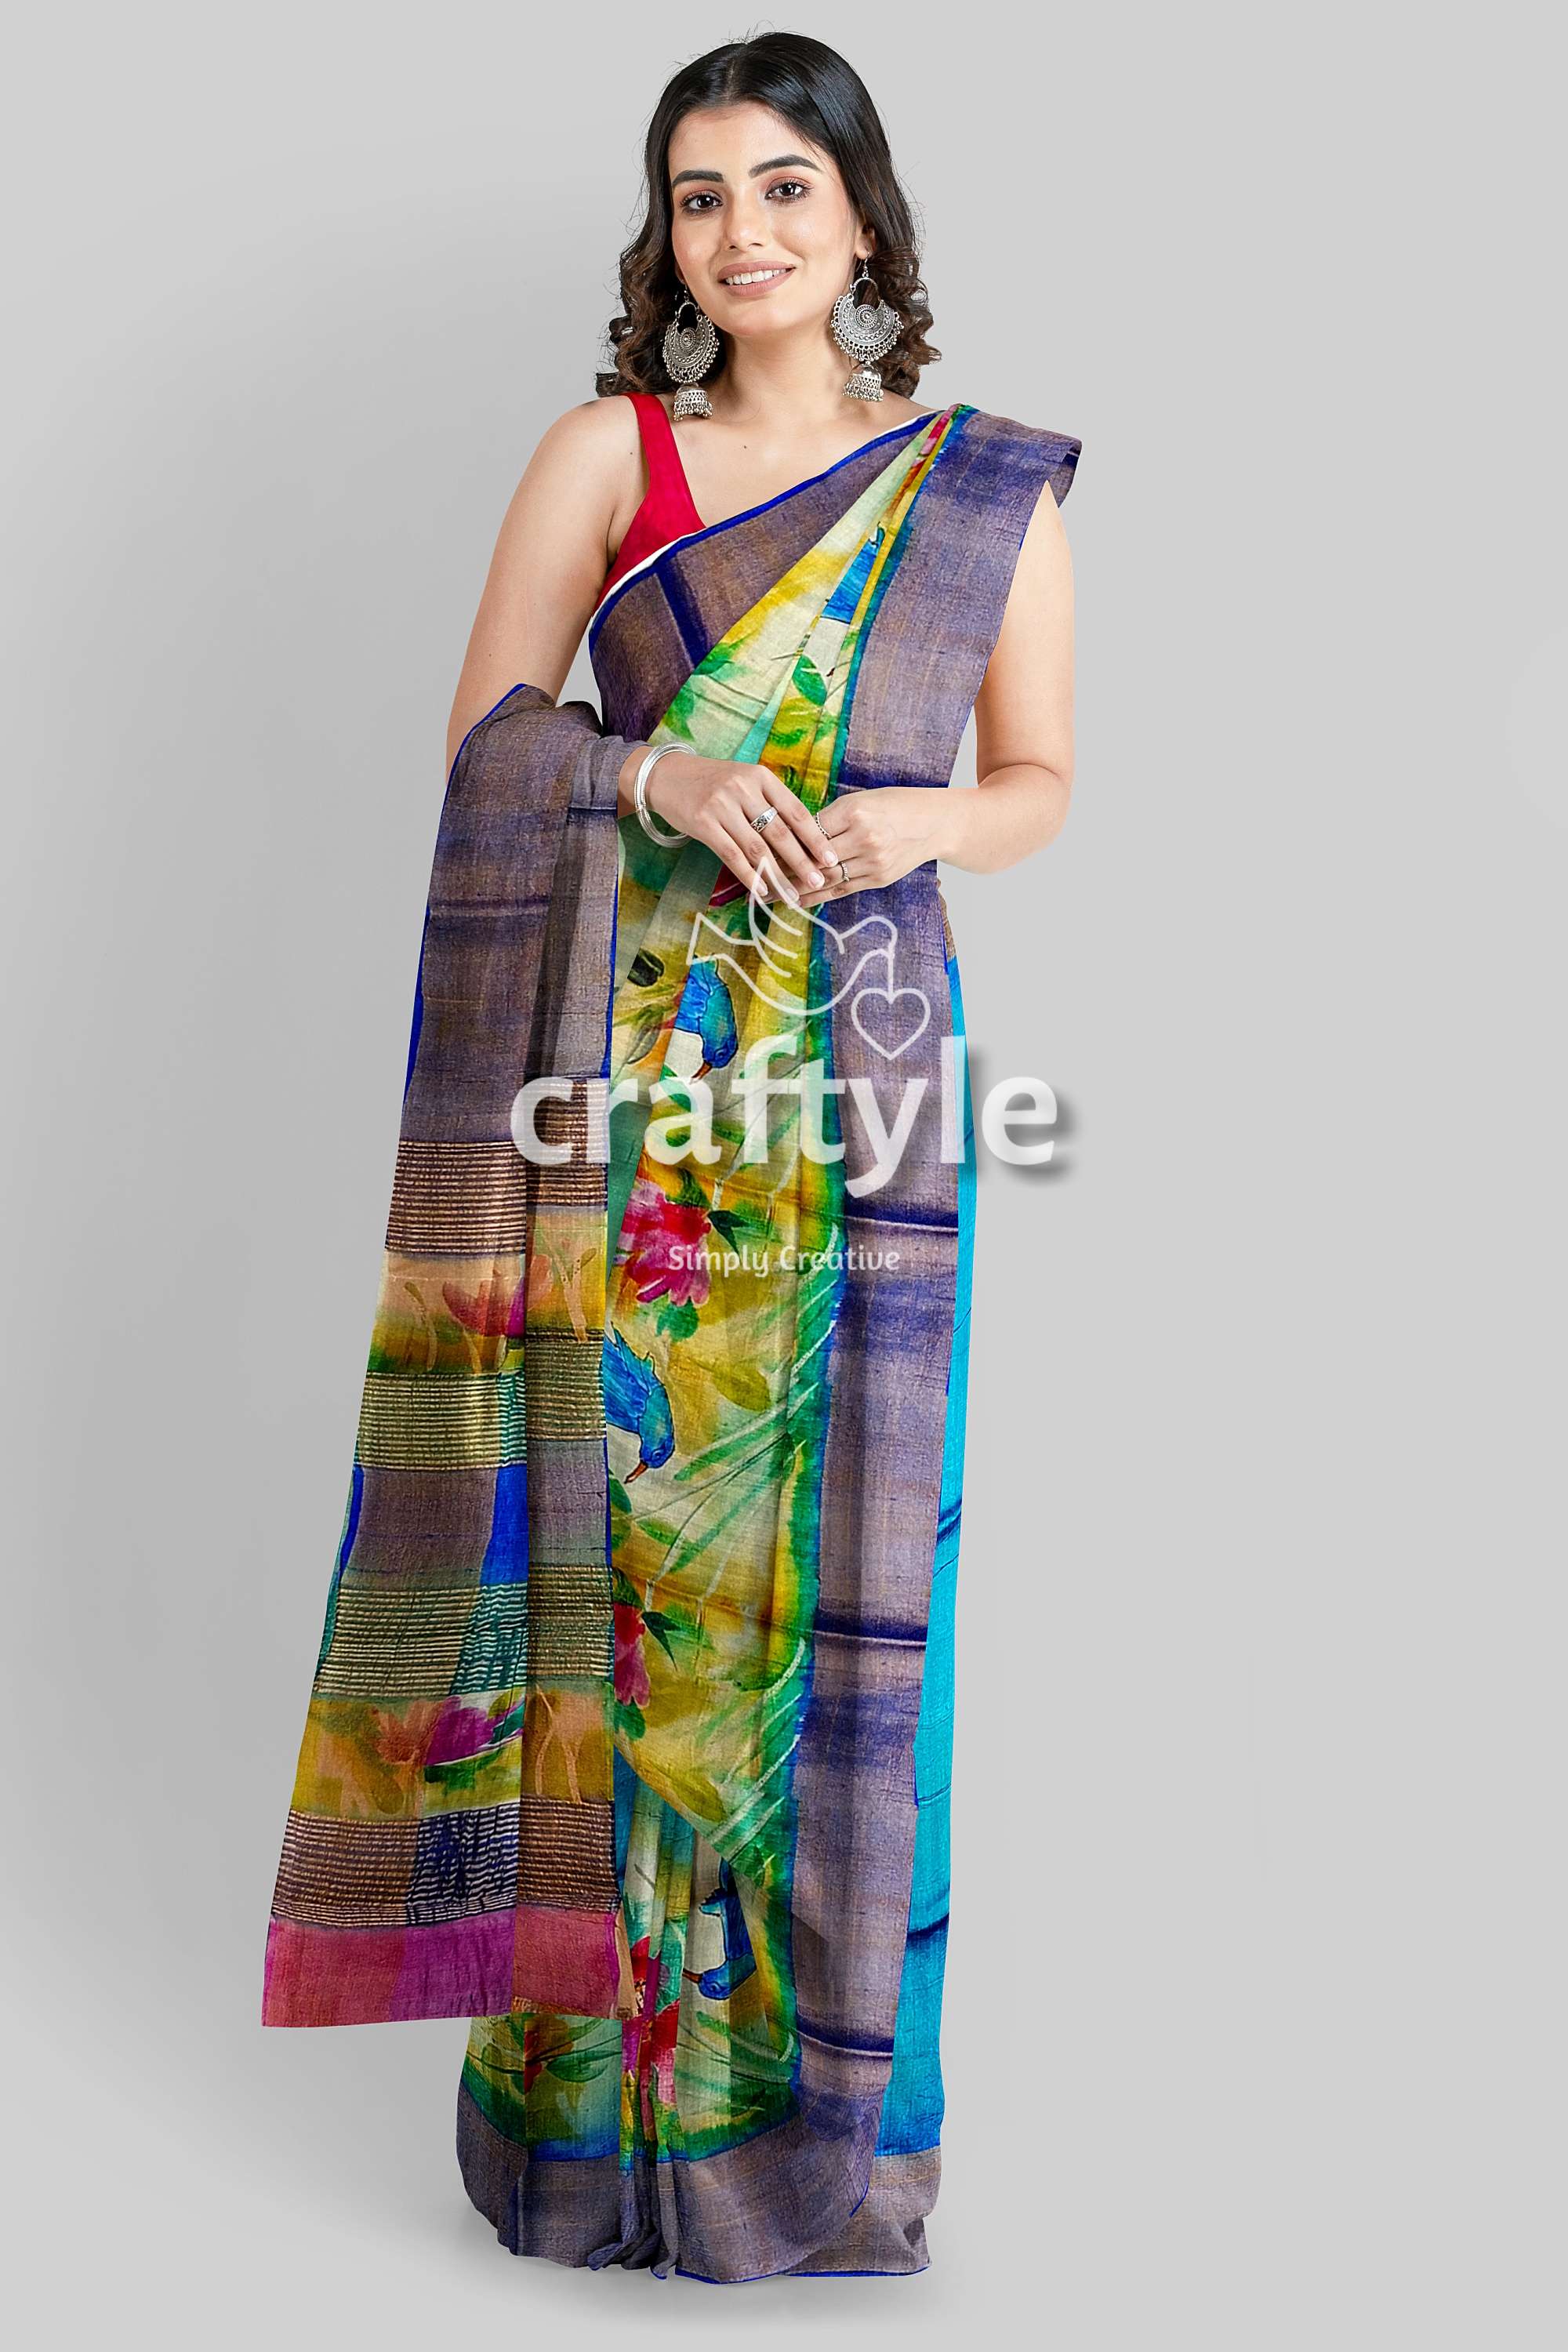 Hand Painted Zari Pure Tussar Saree - Floral Sky Blue Elegant Indian Sari - Craftyle